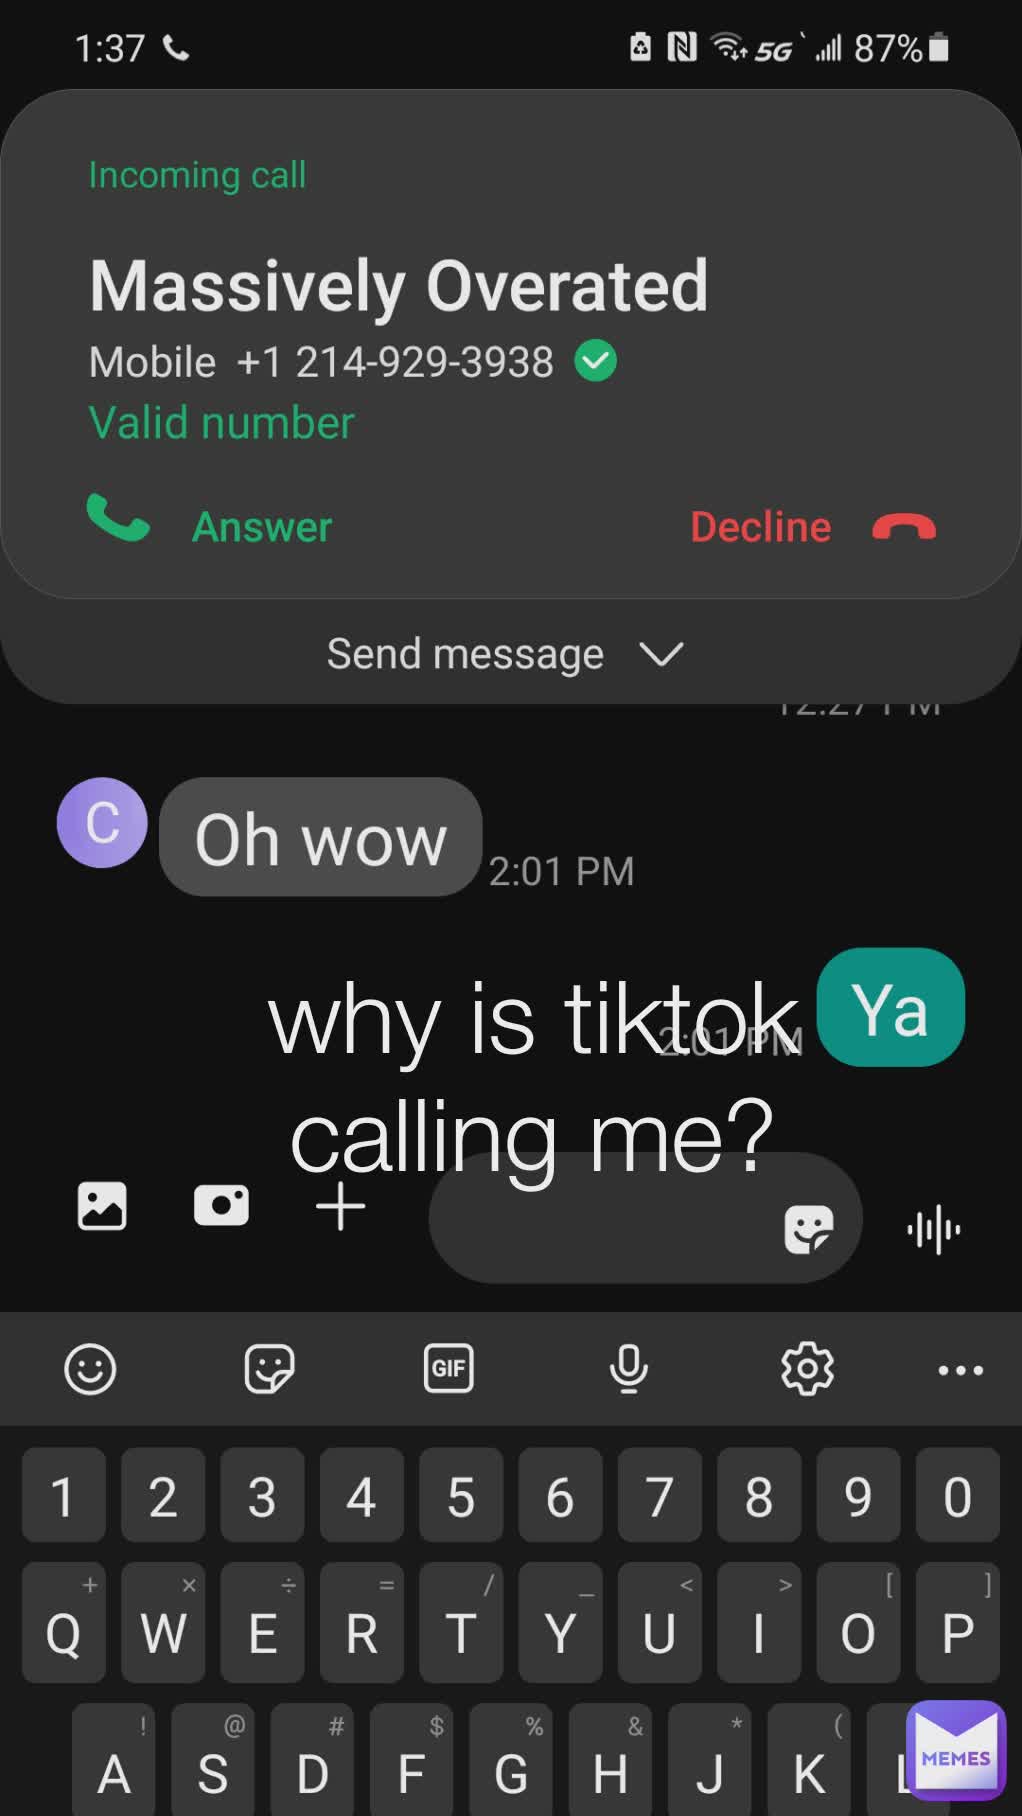 why is tiktok calling me?

